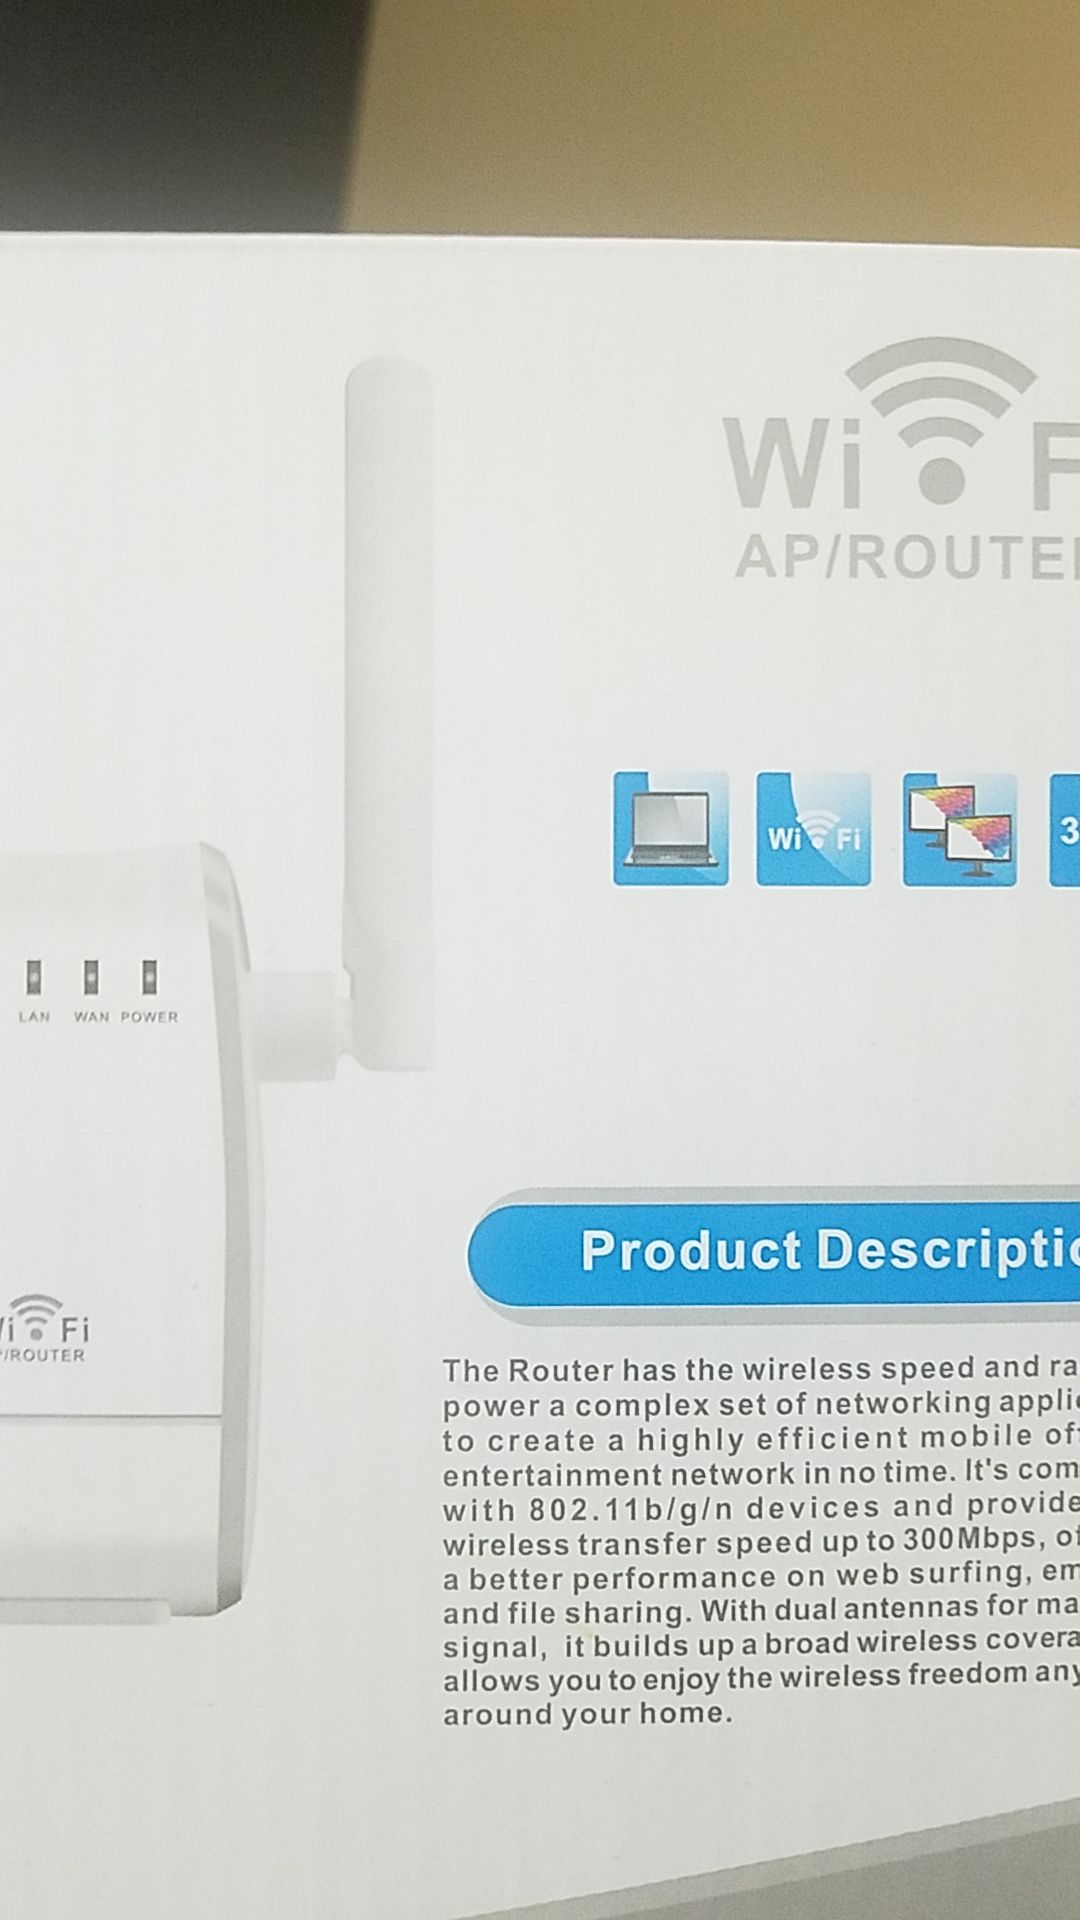 Wifi AP/Router